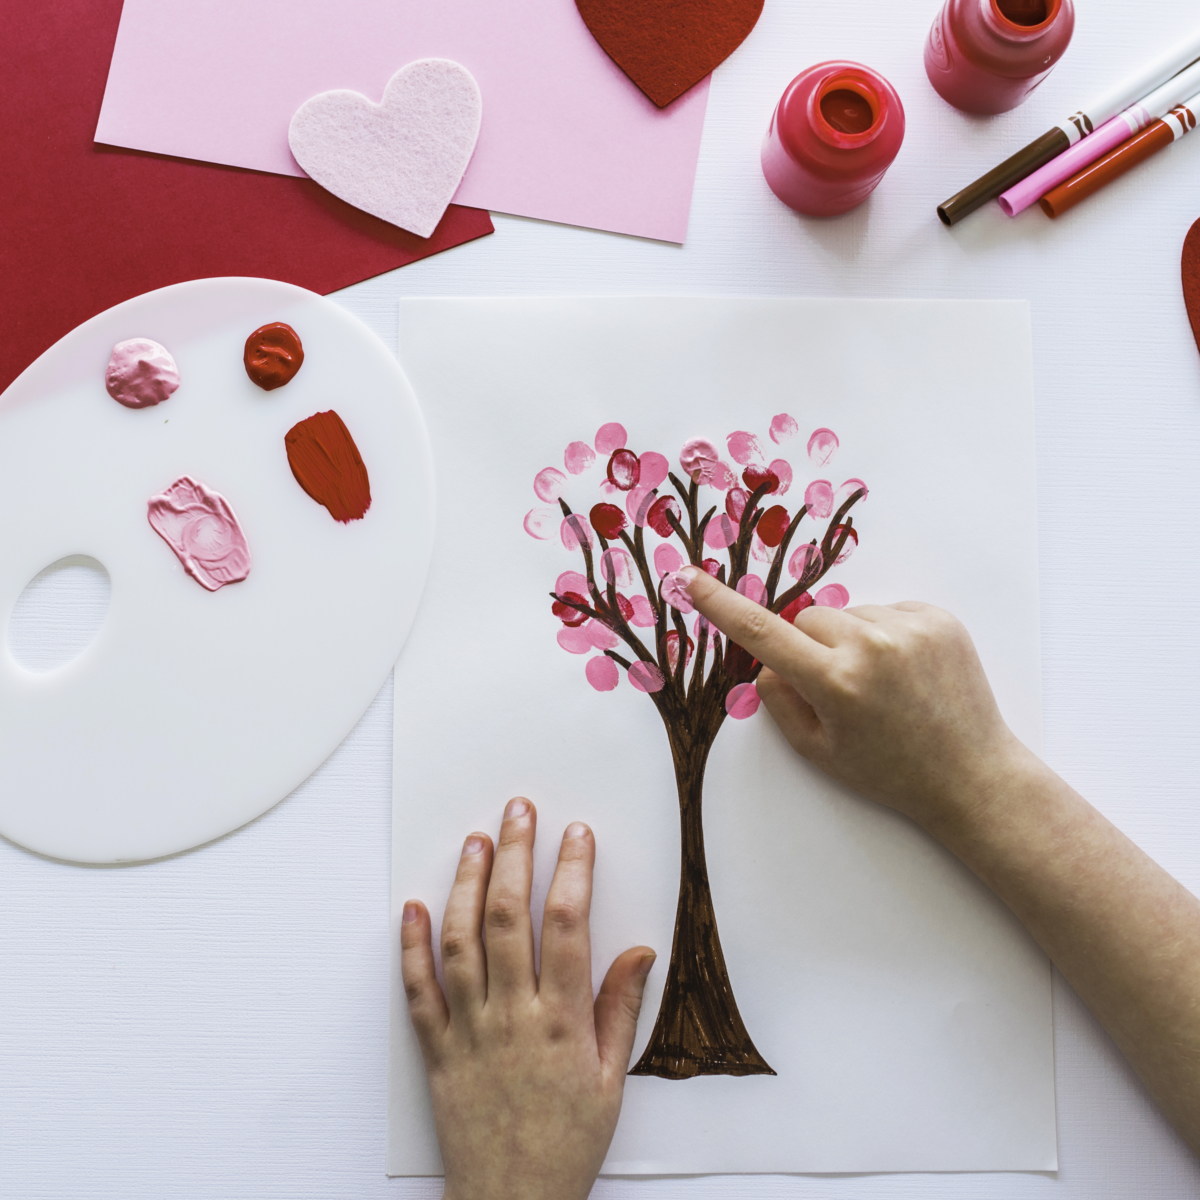 Valentine's Day Craft Idea for Preschoolers - The Purposeful Nest